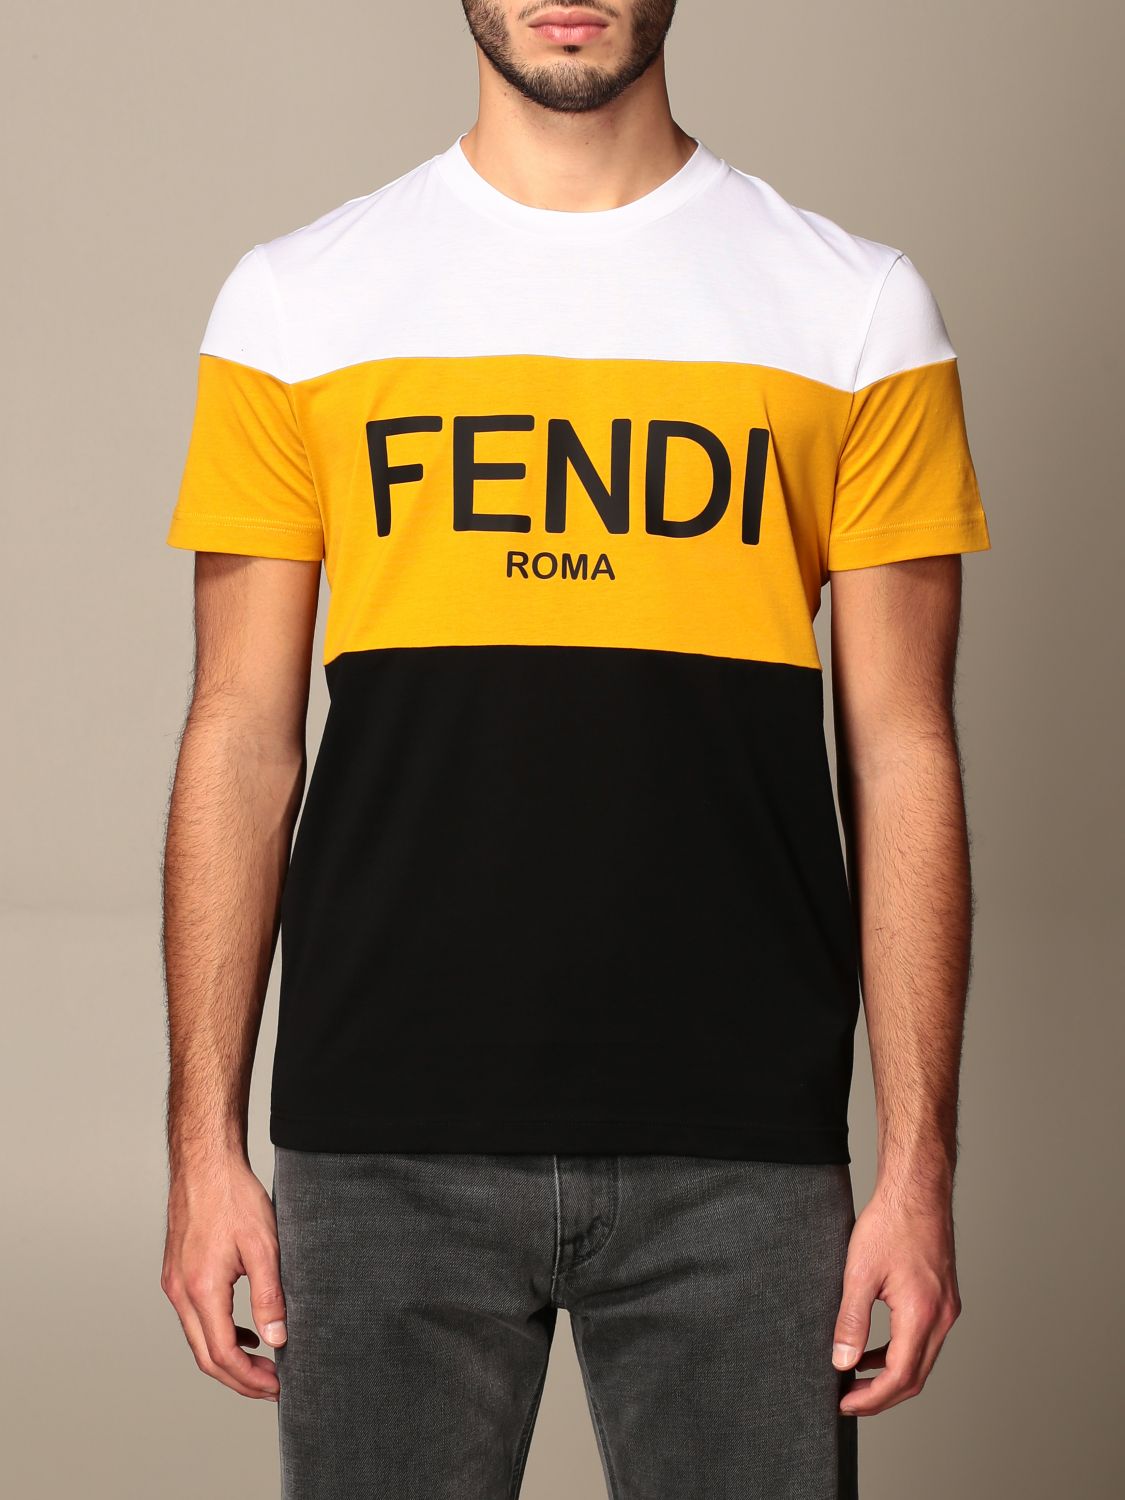 fendi black and yellow t shirt